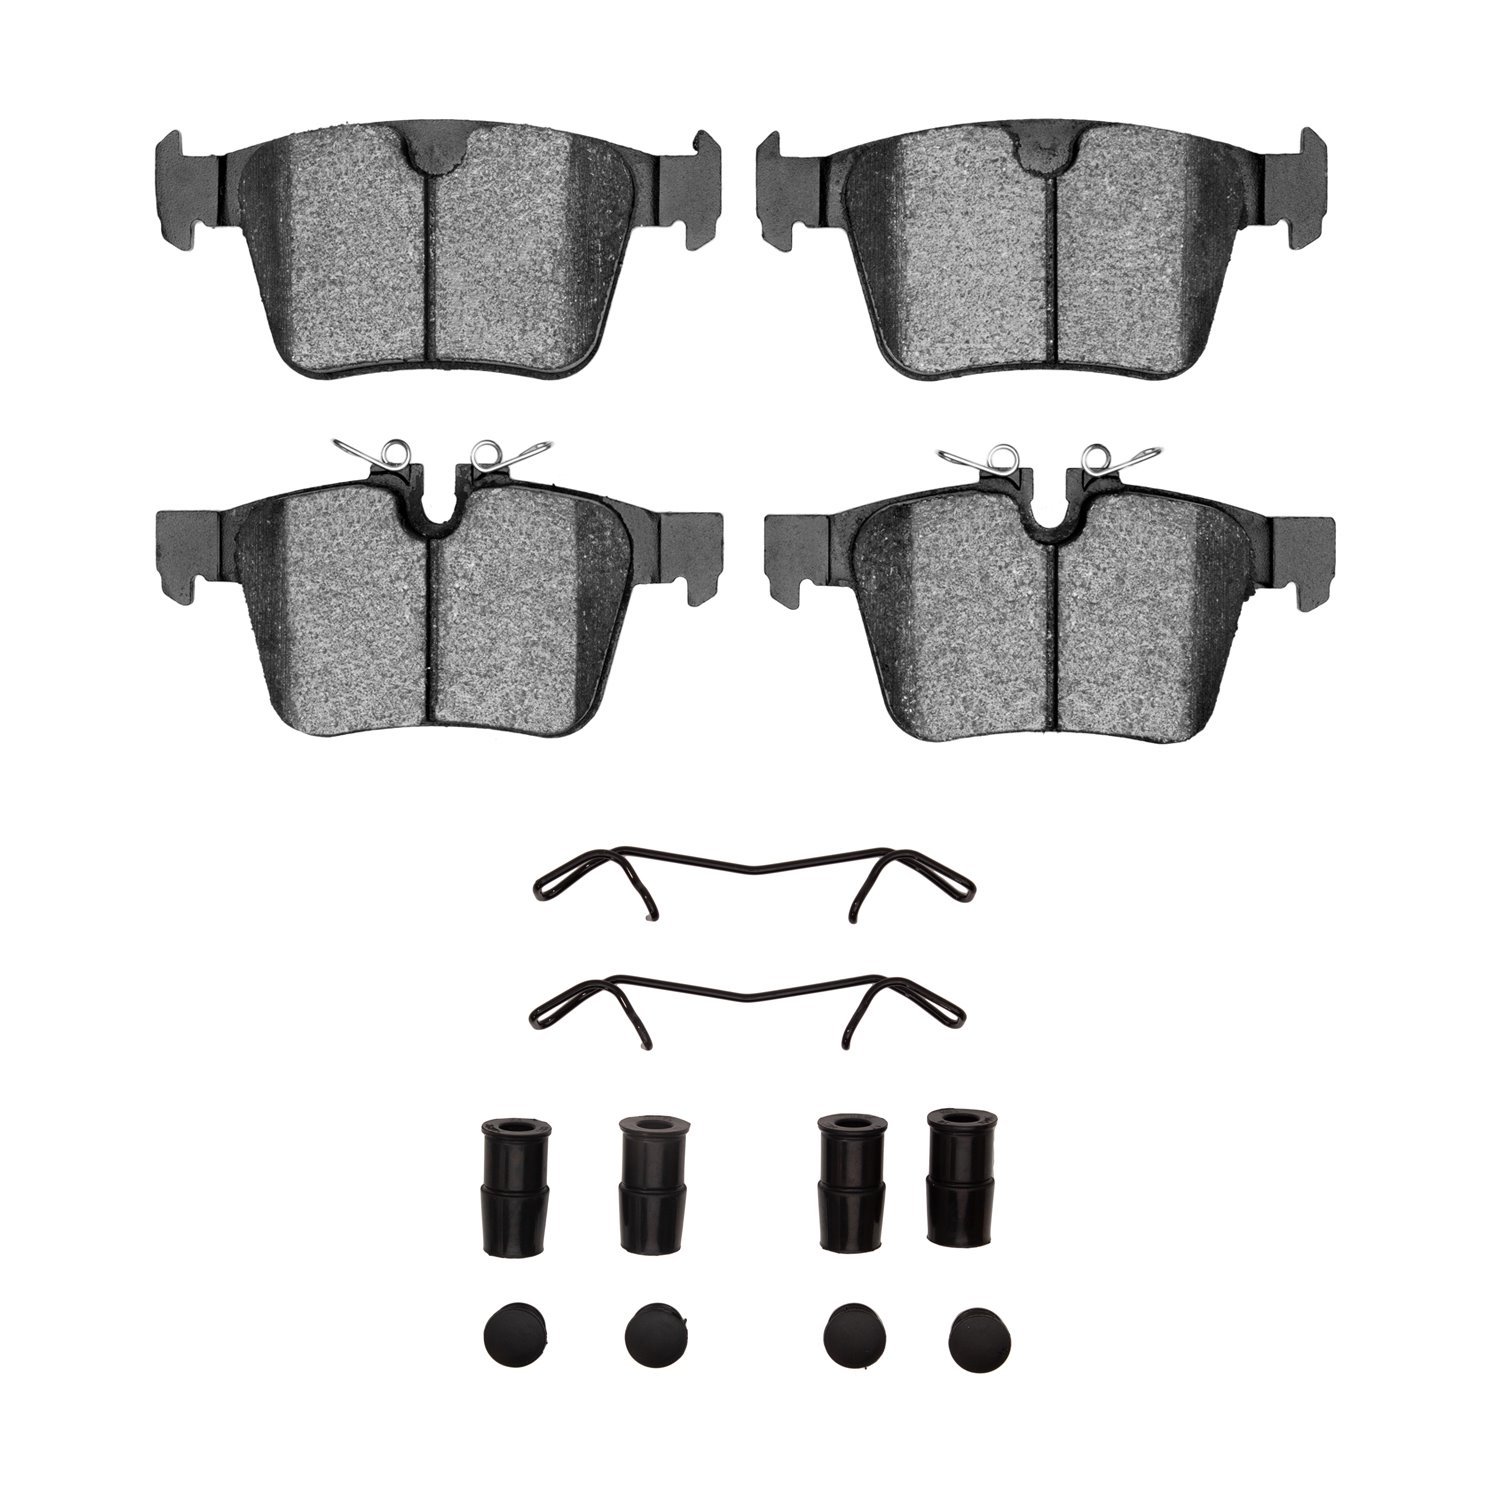 1552-1821-01 5000 Advanced Low-Metallic Brake Pads & Hardware Kit, Fits Select Multiple Makes/Models, Position: Rear